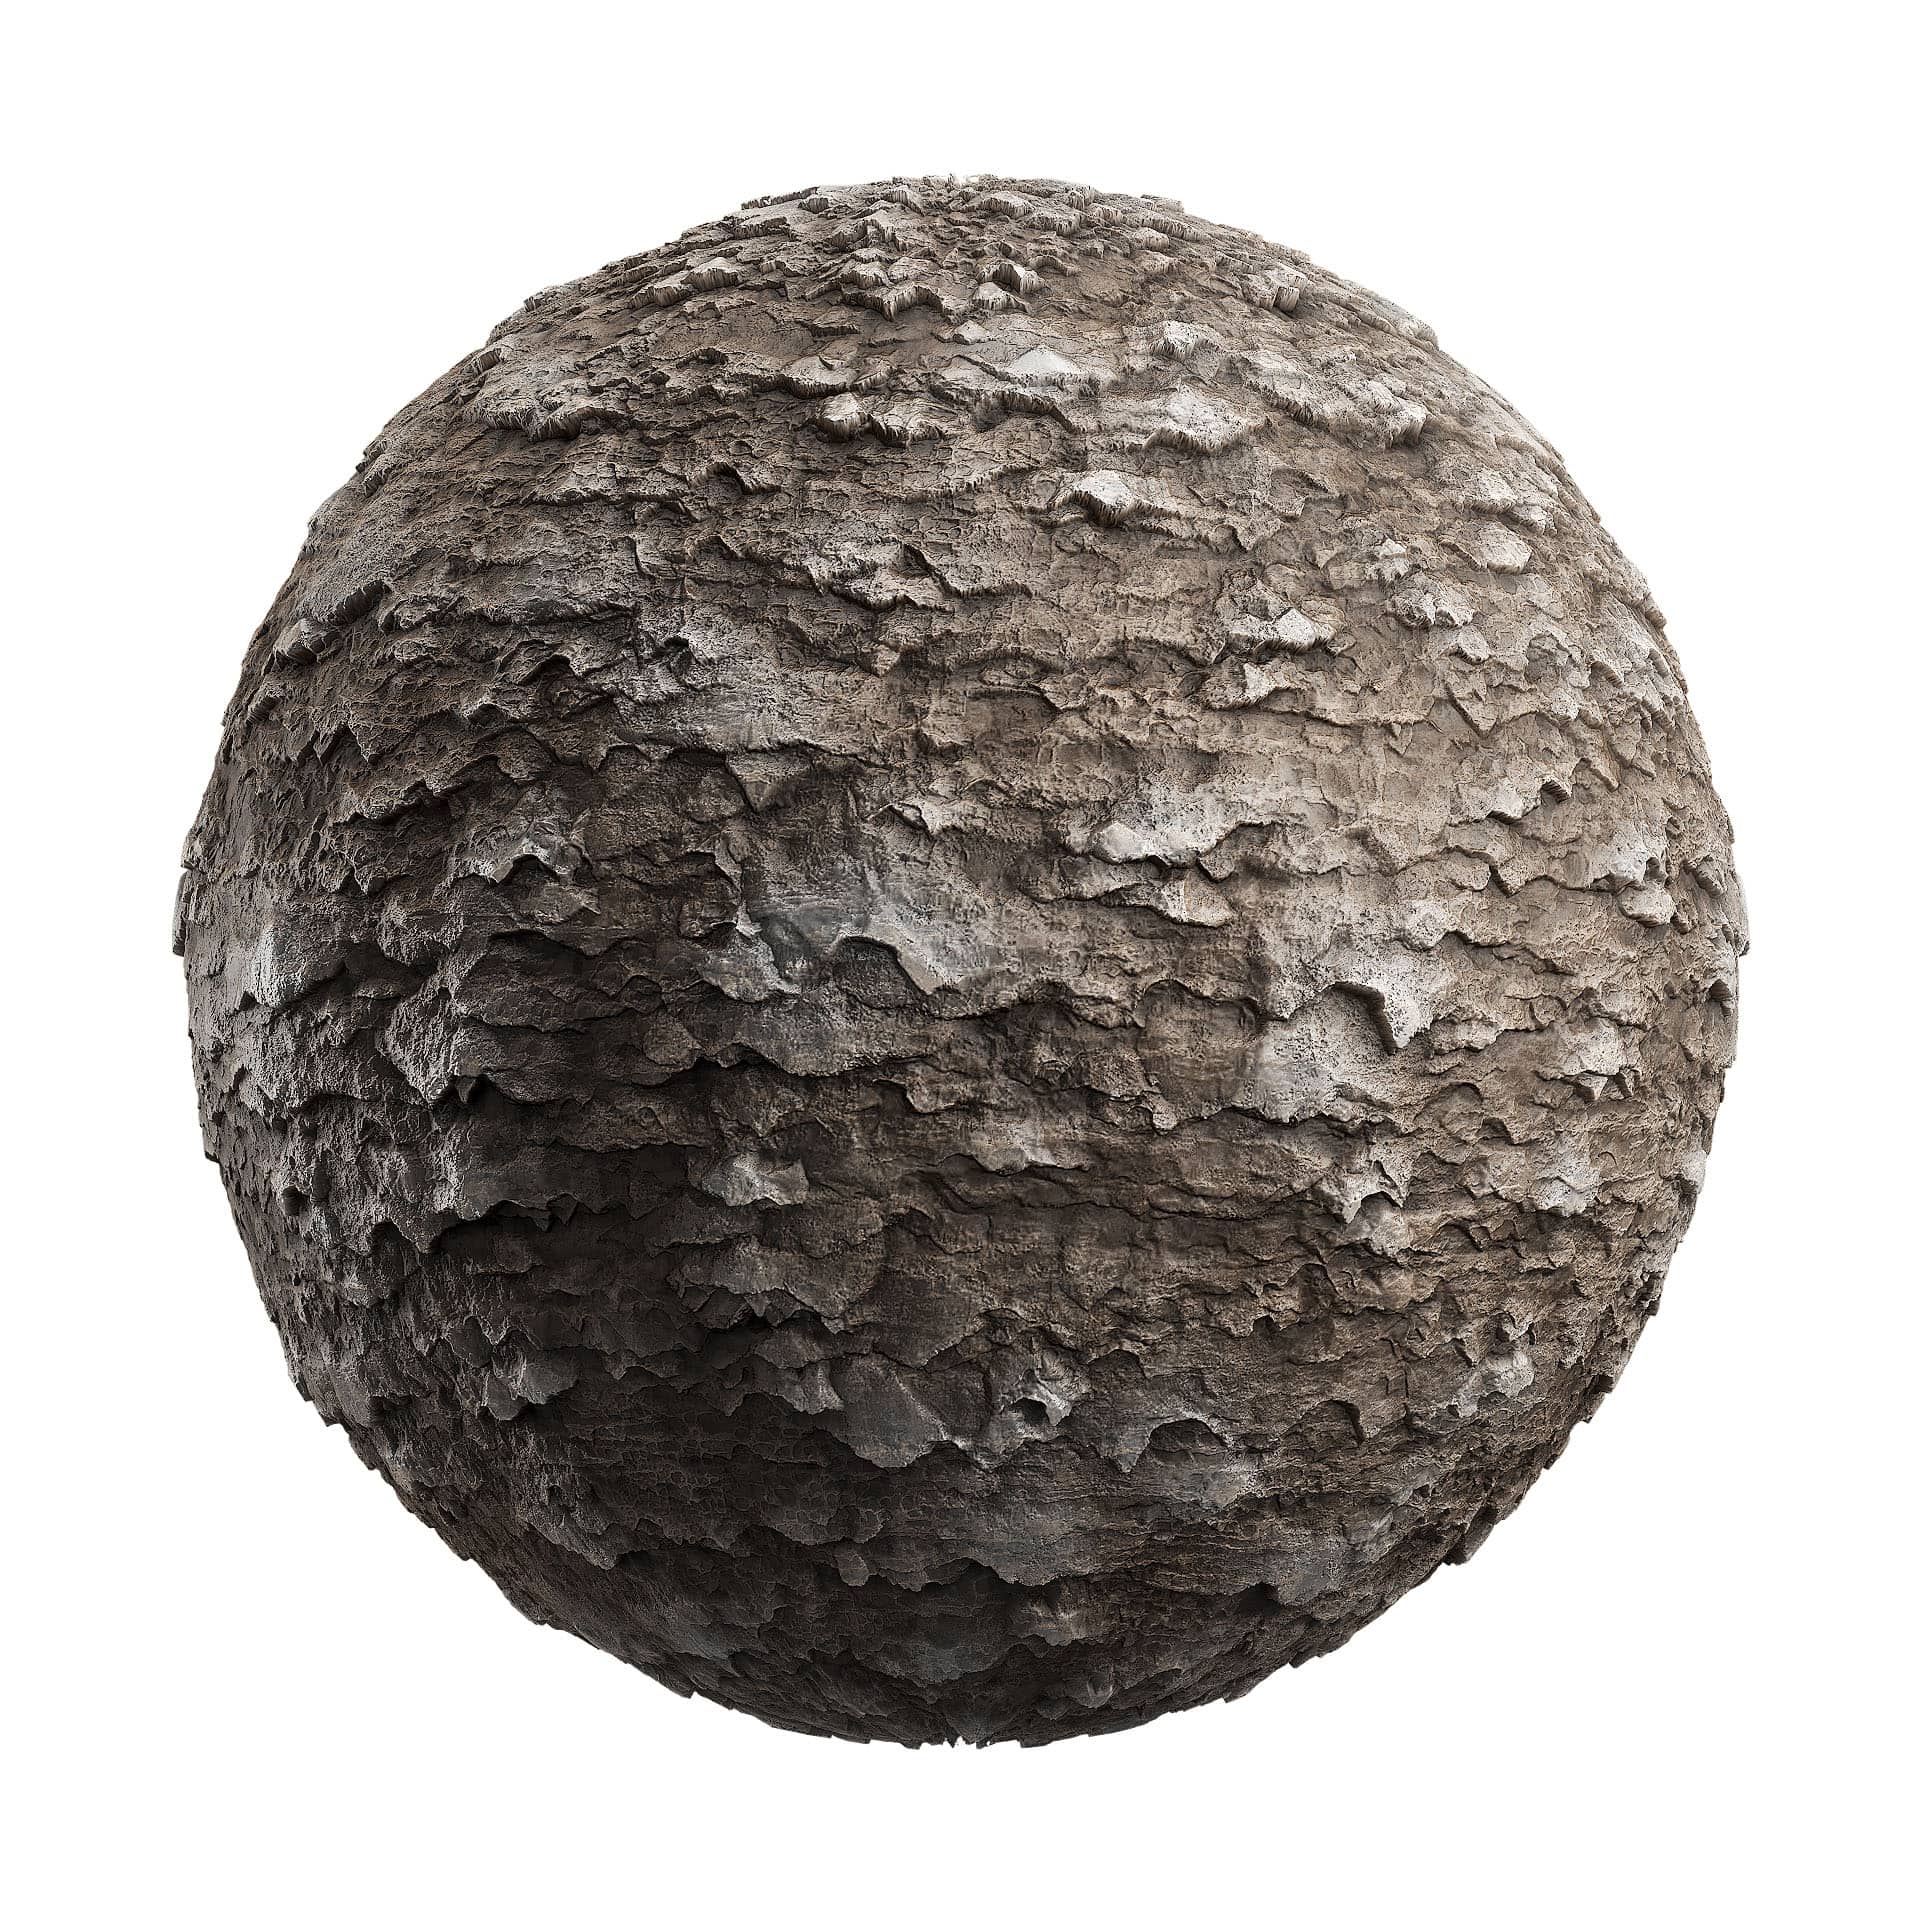 Layered Brown Rock PBR Texture